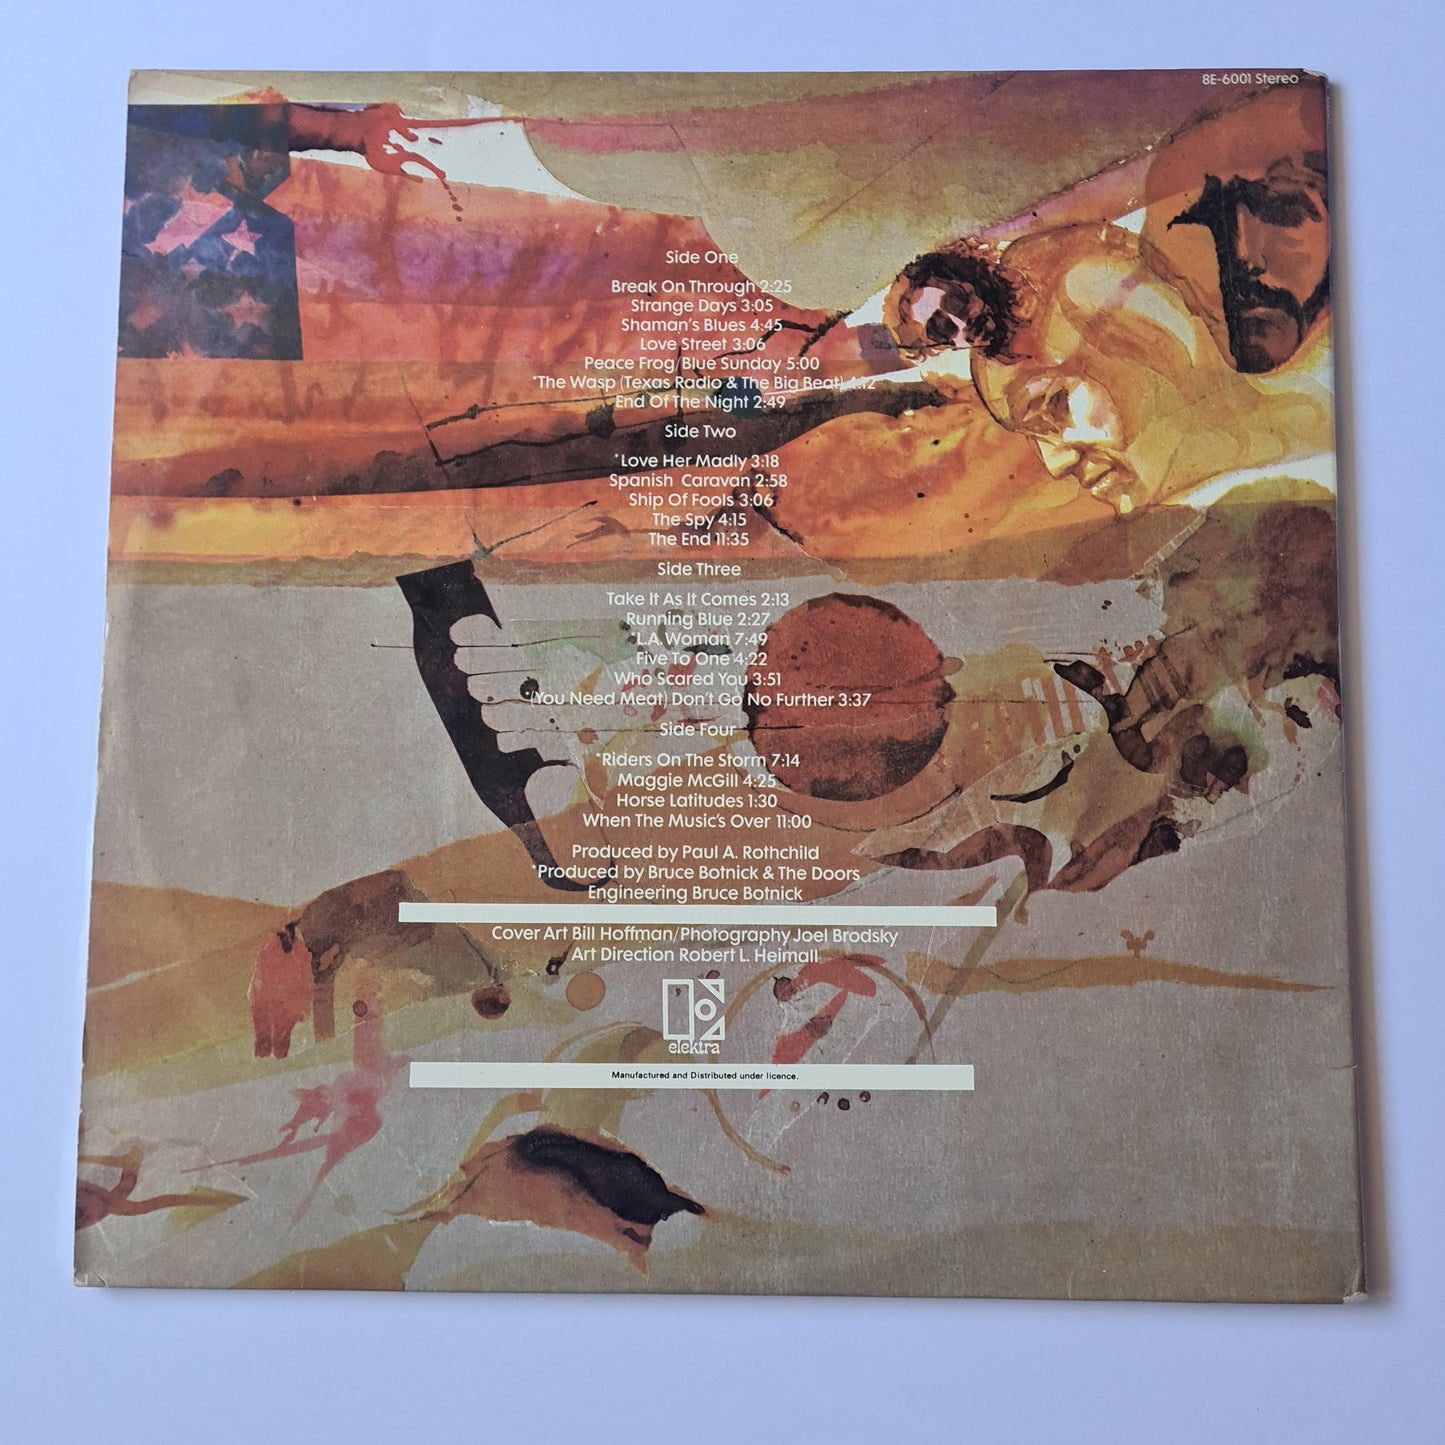 The Doors – Weird Scenes Inside The Goldmine (2LP Greatest Hits) - 1972 (Gatefold) - Vinyl Record LP